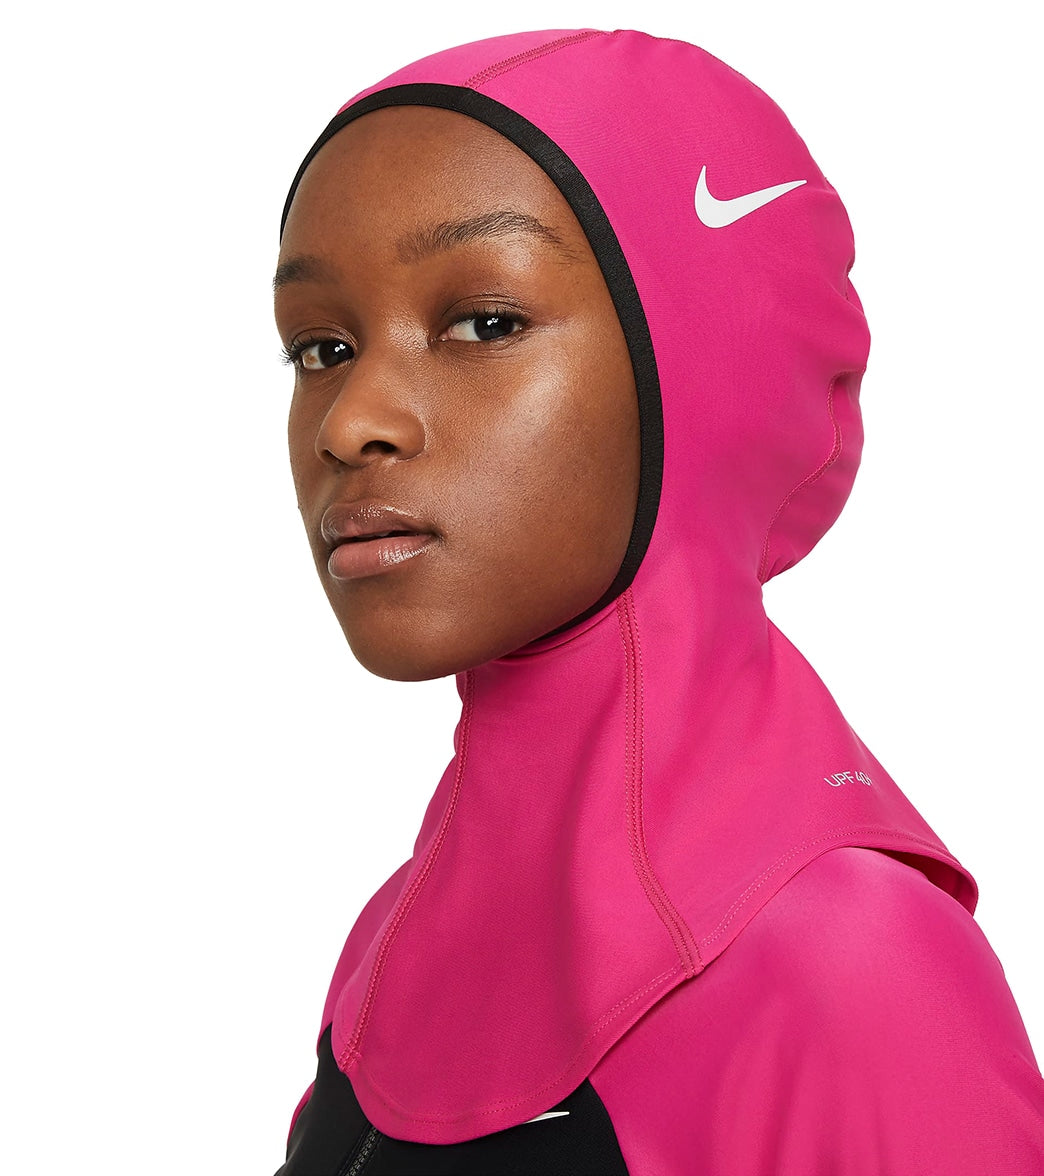 Nike Modest Chlorine Resistant Hijab at SwimOutlet.com